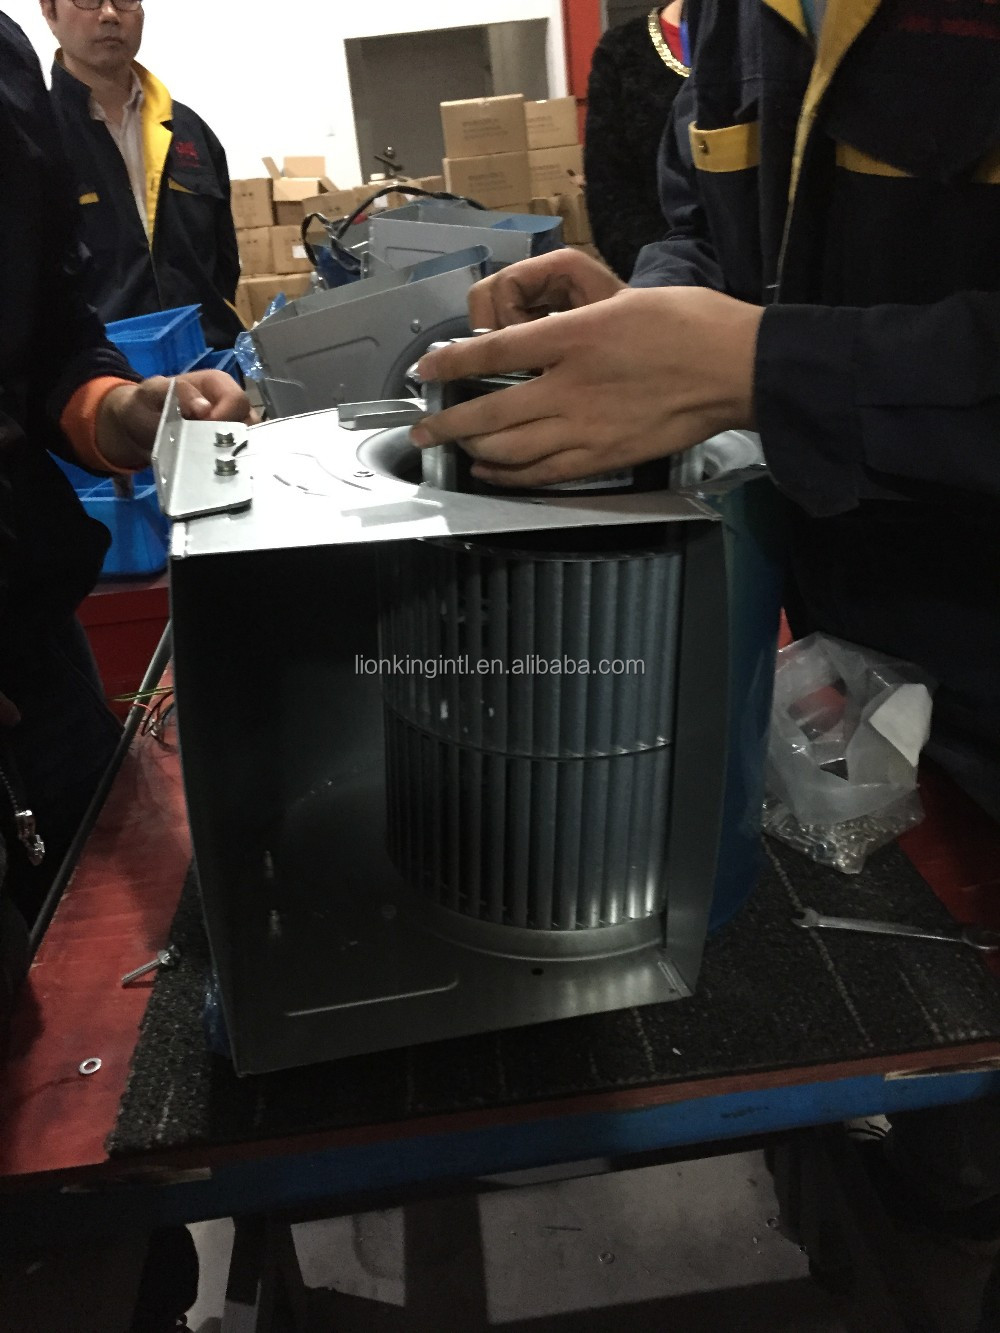 Low noise energy saving centrifugal fan/blower